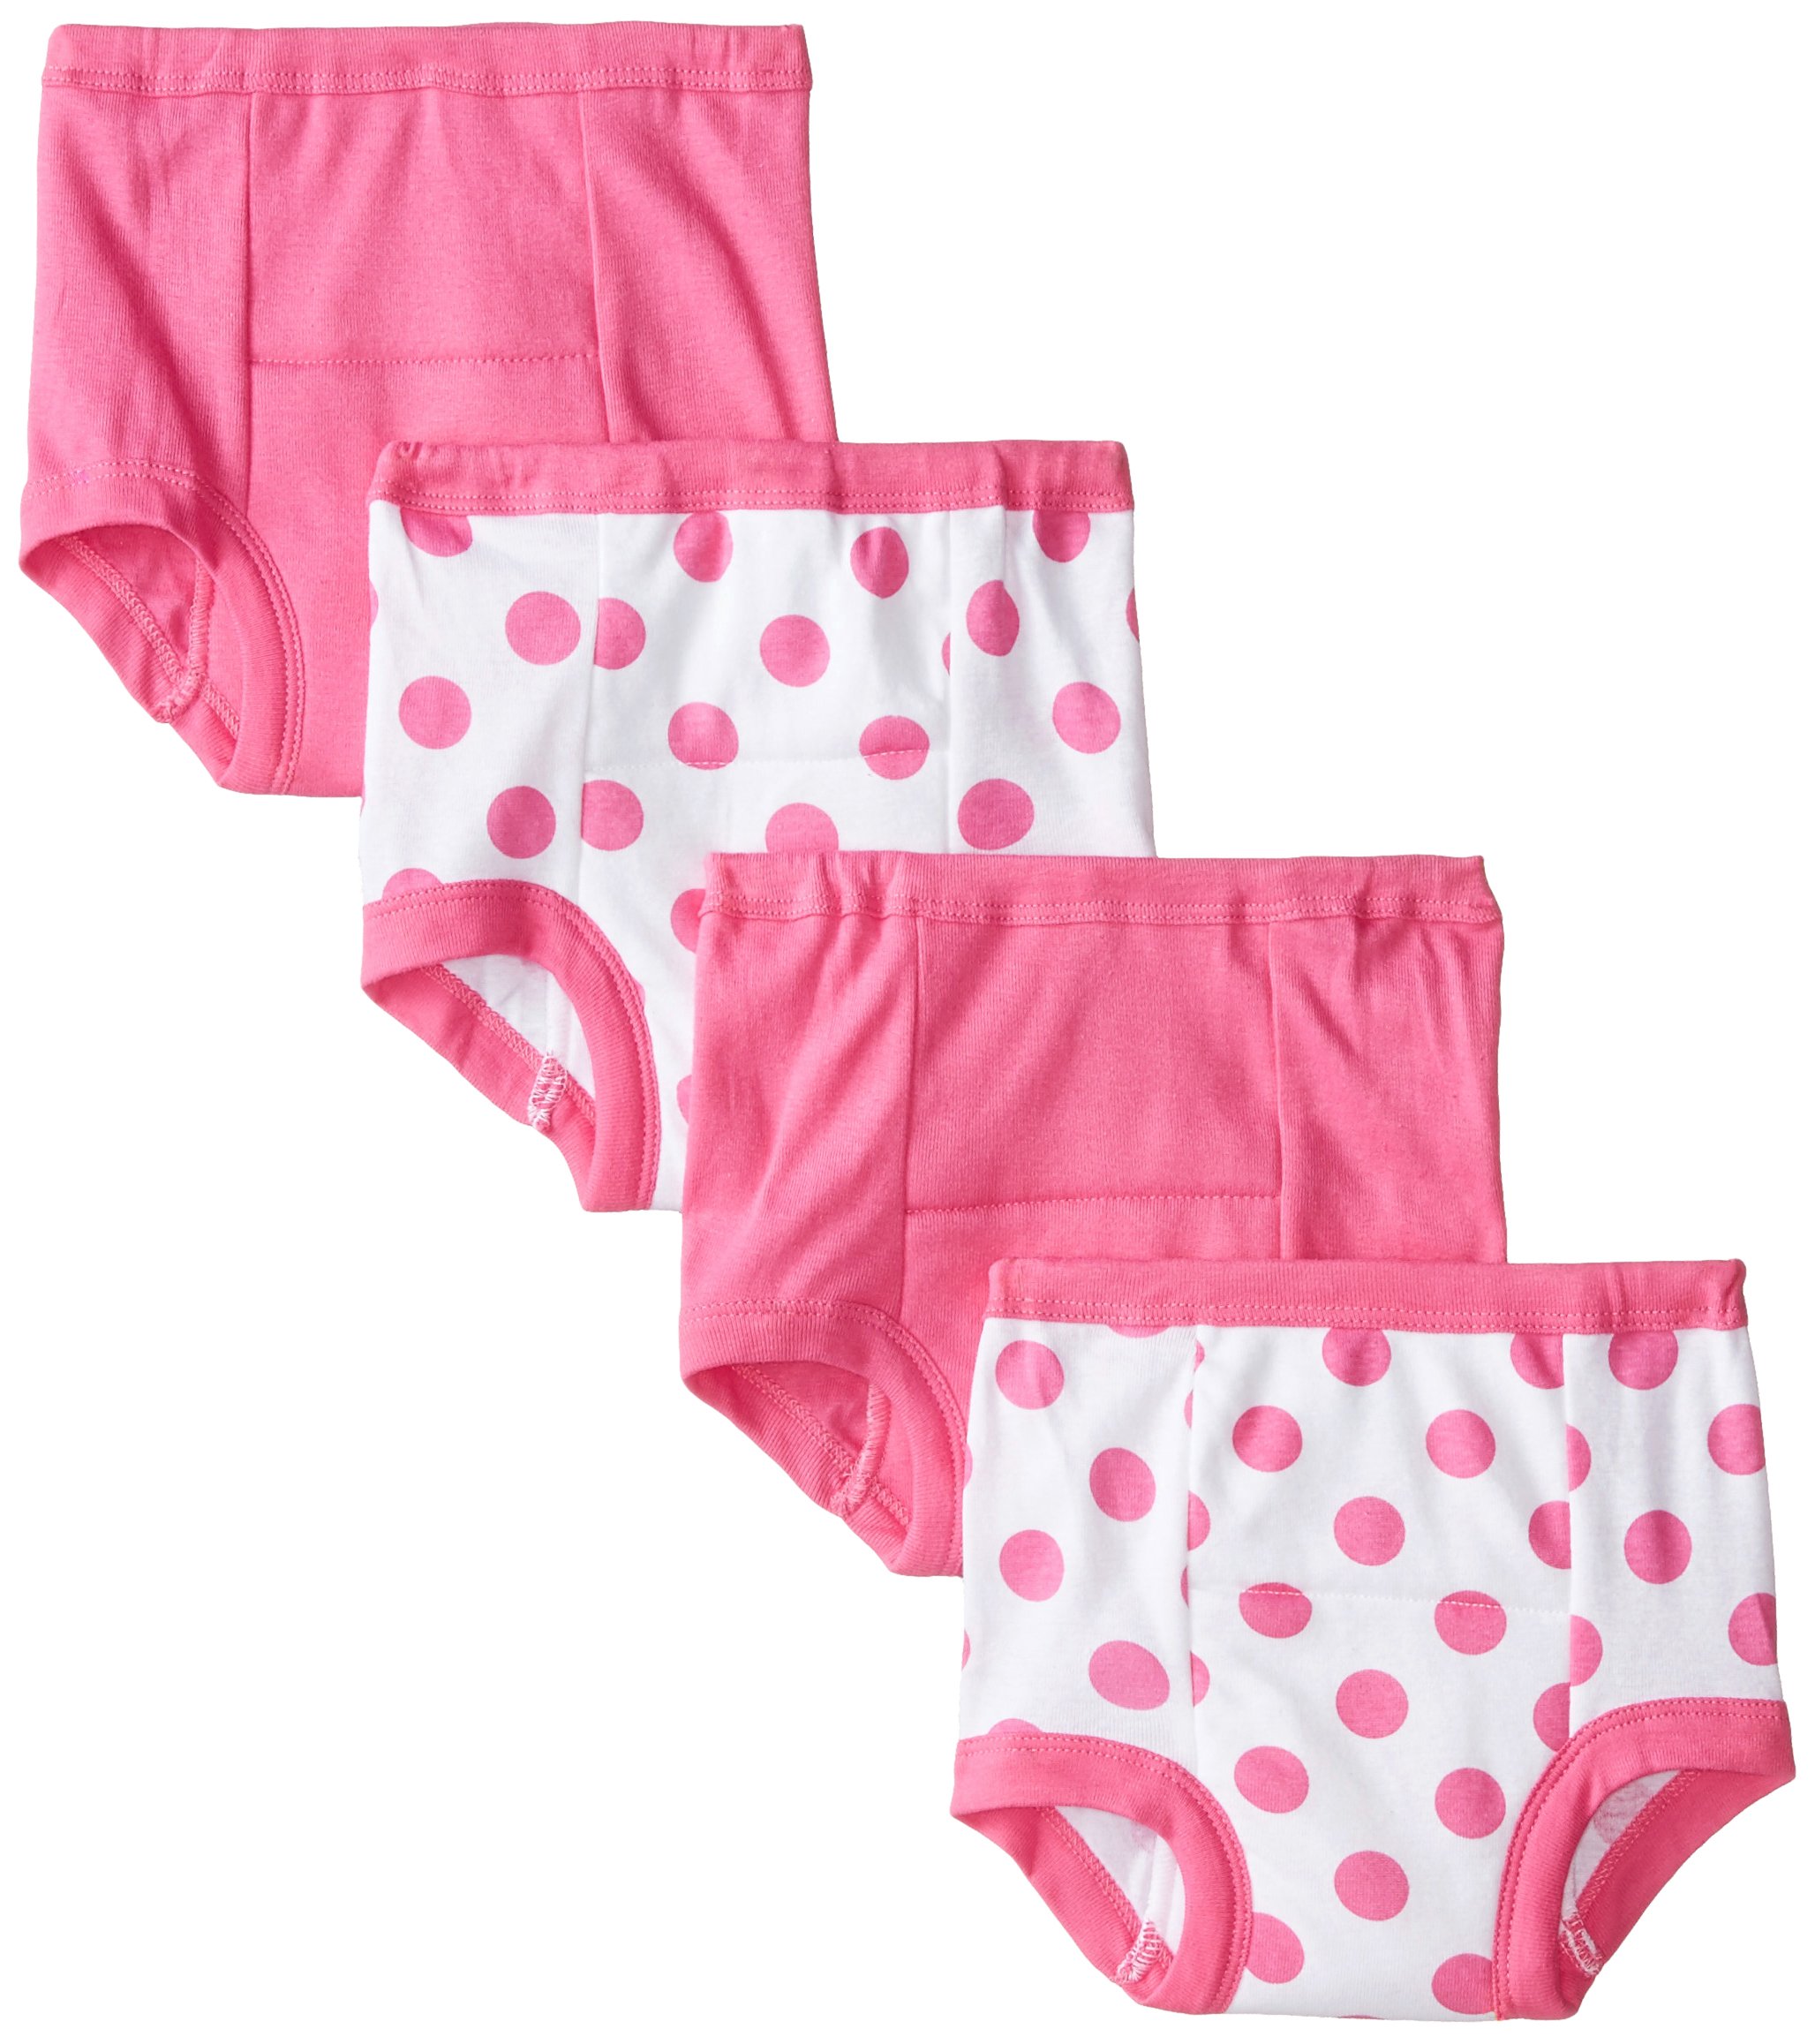 Gerber Baby Girls' Infant Toddler 4 Pack Potty Training Pants Underwear